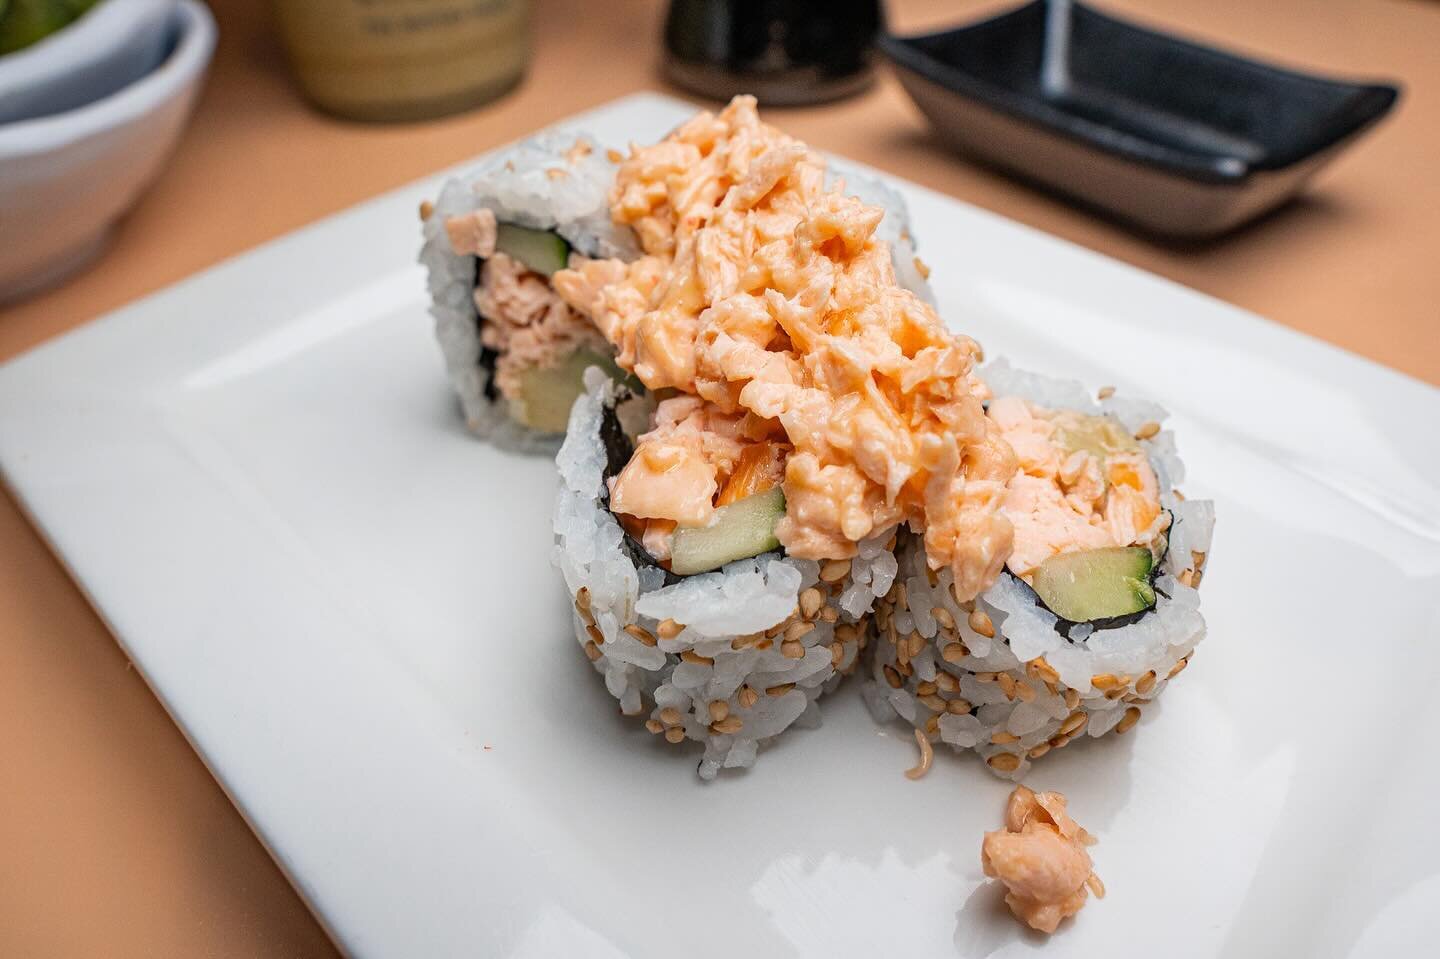 Brace yourself for a flavor explosion! Sushi time is the best time. ITADAKIMASU! #vegasEats 🍣💥 

◾◽◾◽◾◽◾◽◾◽
🍣 𝗔𝗬𝗖𝗘 𝗦𝗨𝗦𝗛𝗜 𝗠𝗢𝗡 𝗠𝗔𝗥𝗬𝗟𝗔𝗡𝗗
⏰ ᴅᴀɪʟʏ: 12:00 ᴘᴍ - 11:00 ᴘᴍ
⏰ ʟᴀꜱᴛ ꜱᴇᴀᴛɪɴɢ ꜰᴏʀ ᴀʏᴄᴇ 10ᴘᴍ
⏰ ʟᴀꜱᴛᴏʀᴅᴇʀ10:30ᴘᴍ 
📍 9770 ꜱ ᴍᴀʀʏʟ